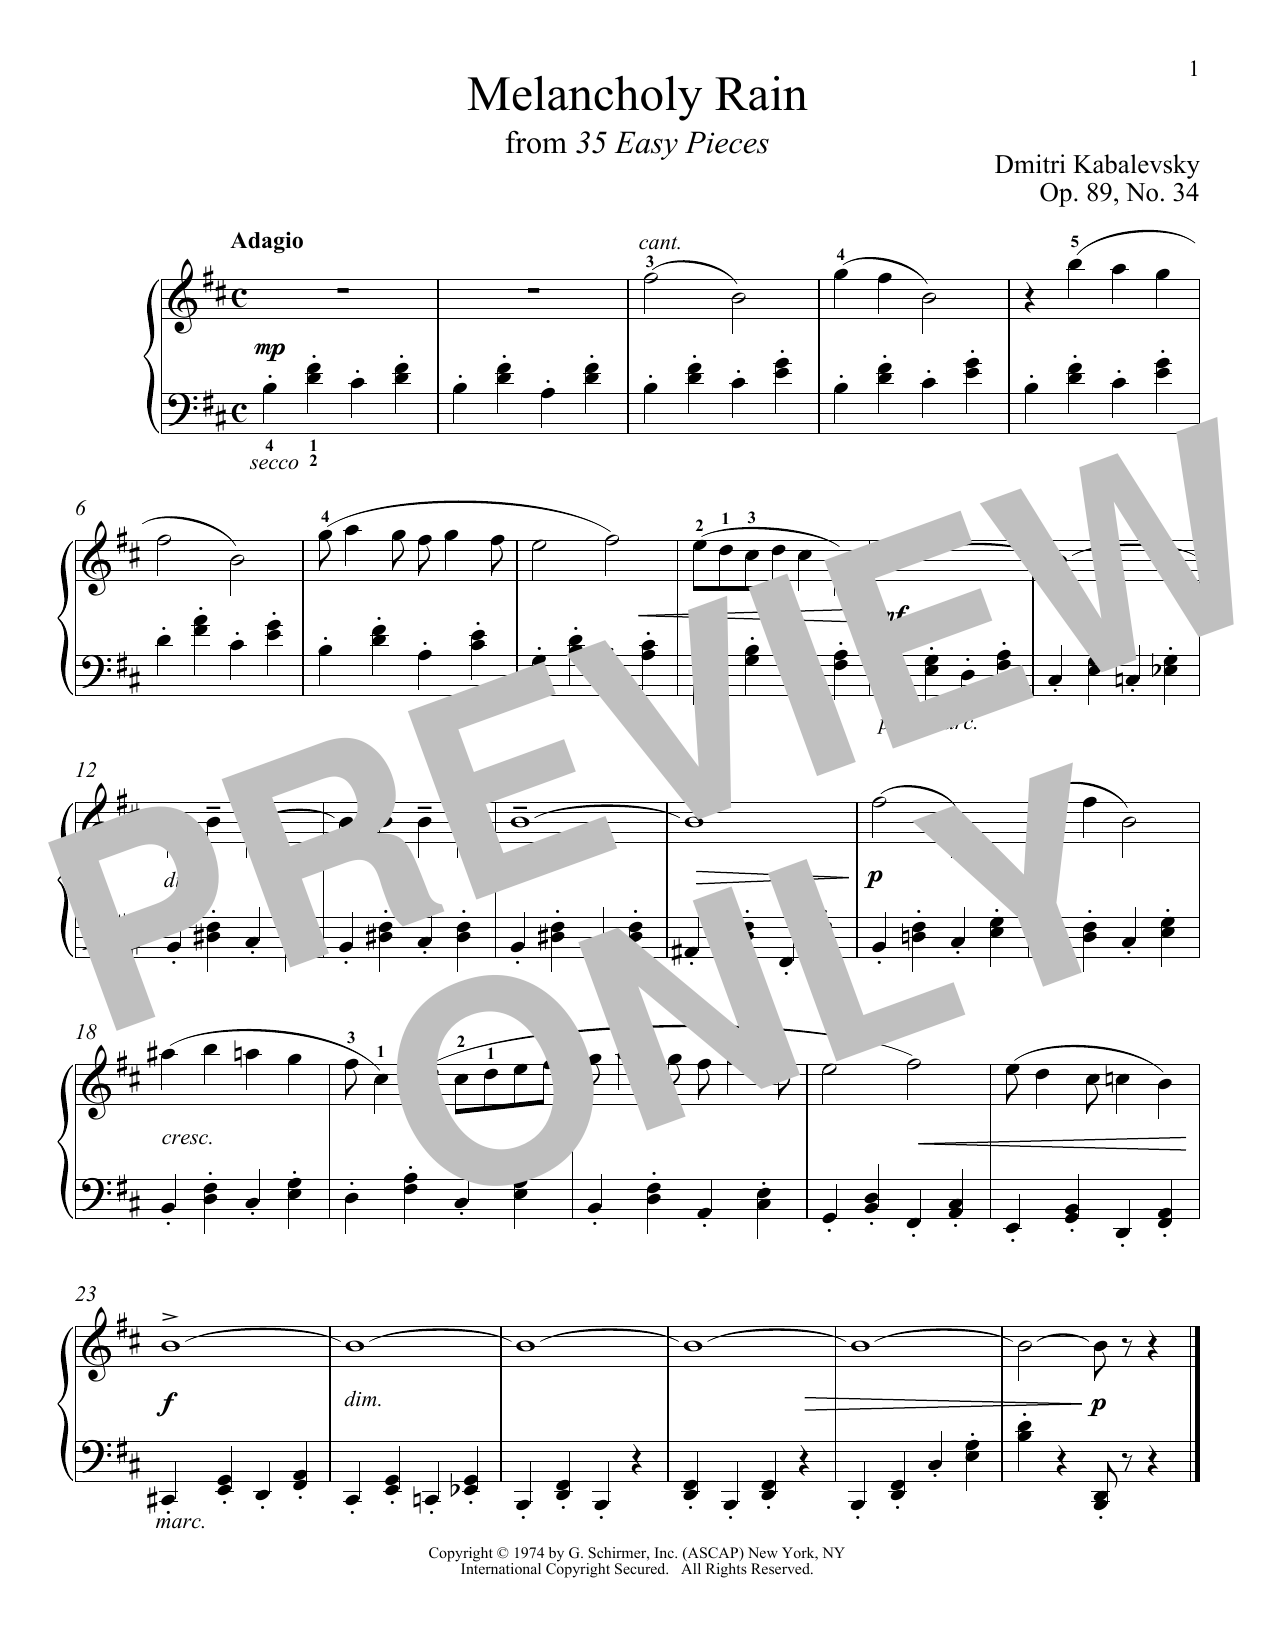 Dmitri Kabalevsky Melancholy Rain, Op. 89, No. 34 Sheet Music Notes & Chords for Piano - Download or Print PDF